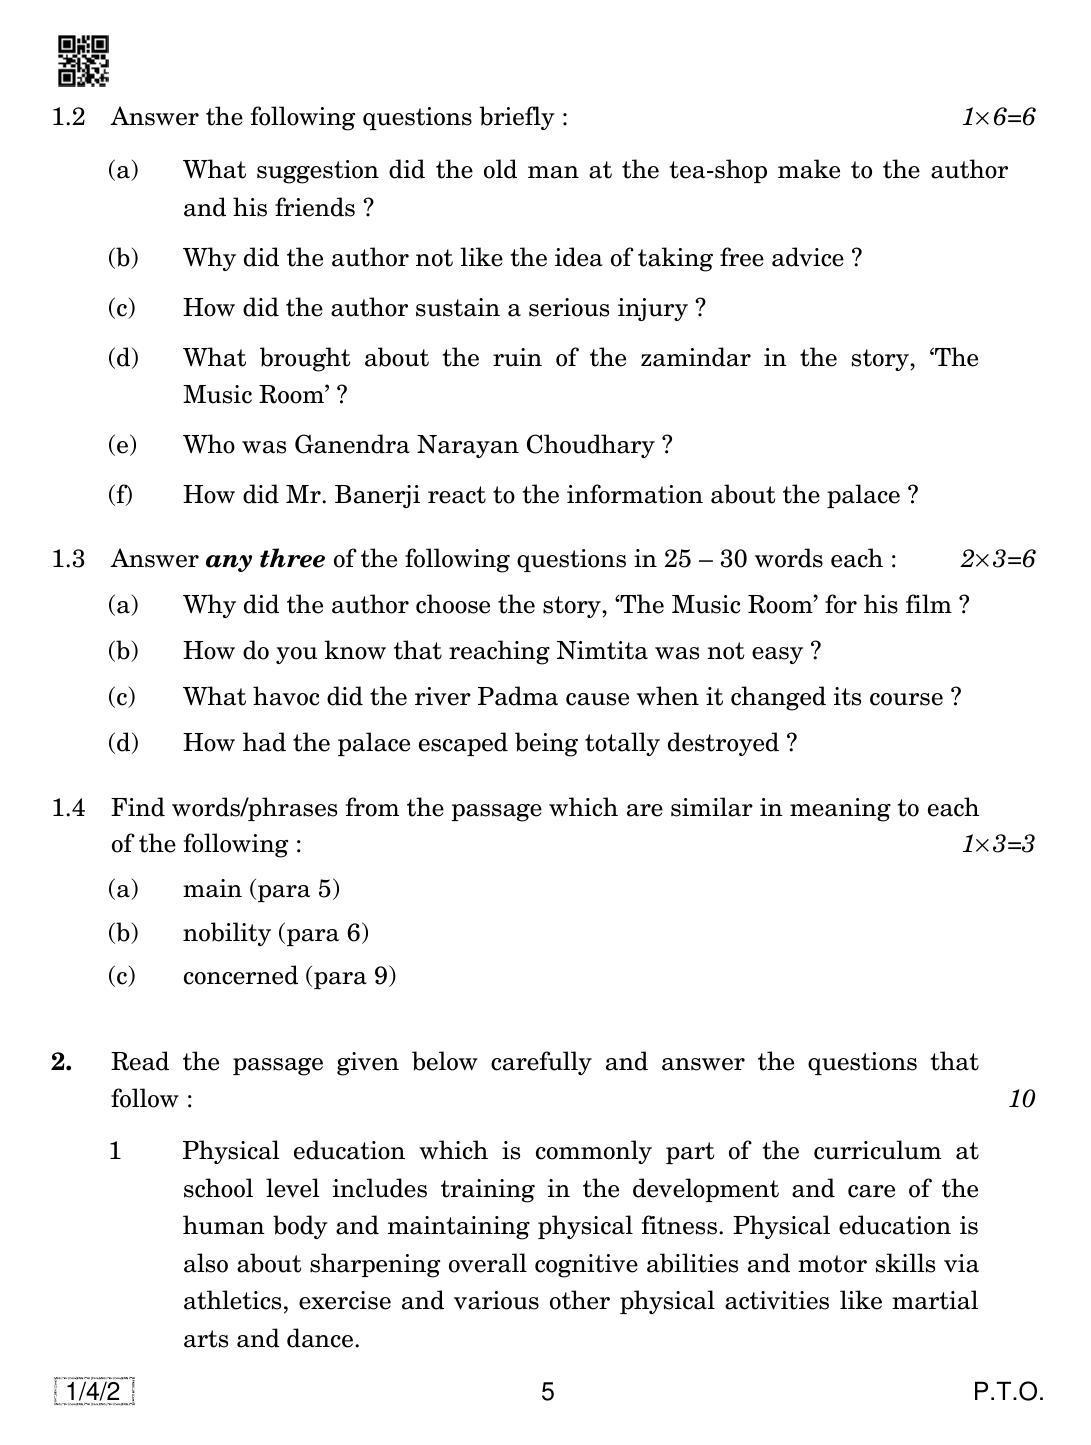 CBSE Class 12 1-4-2 English Core 2019 Question Paper - Page 5